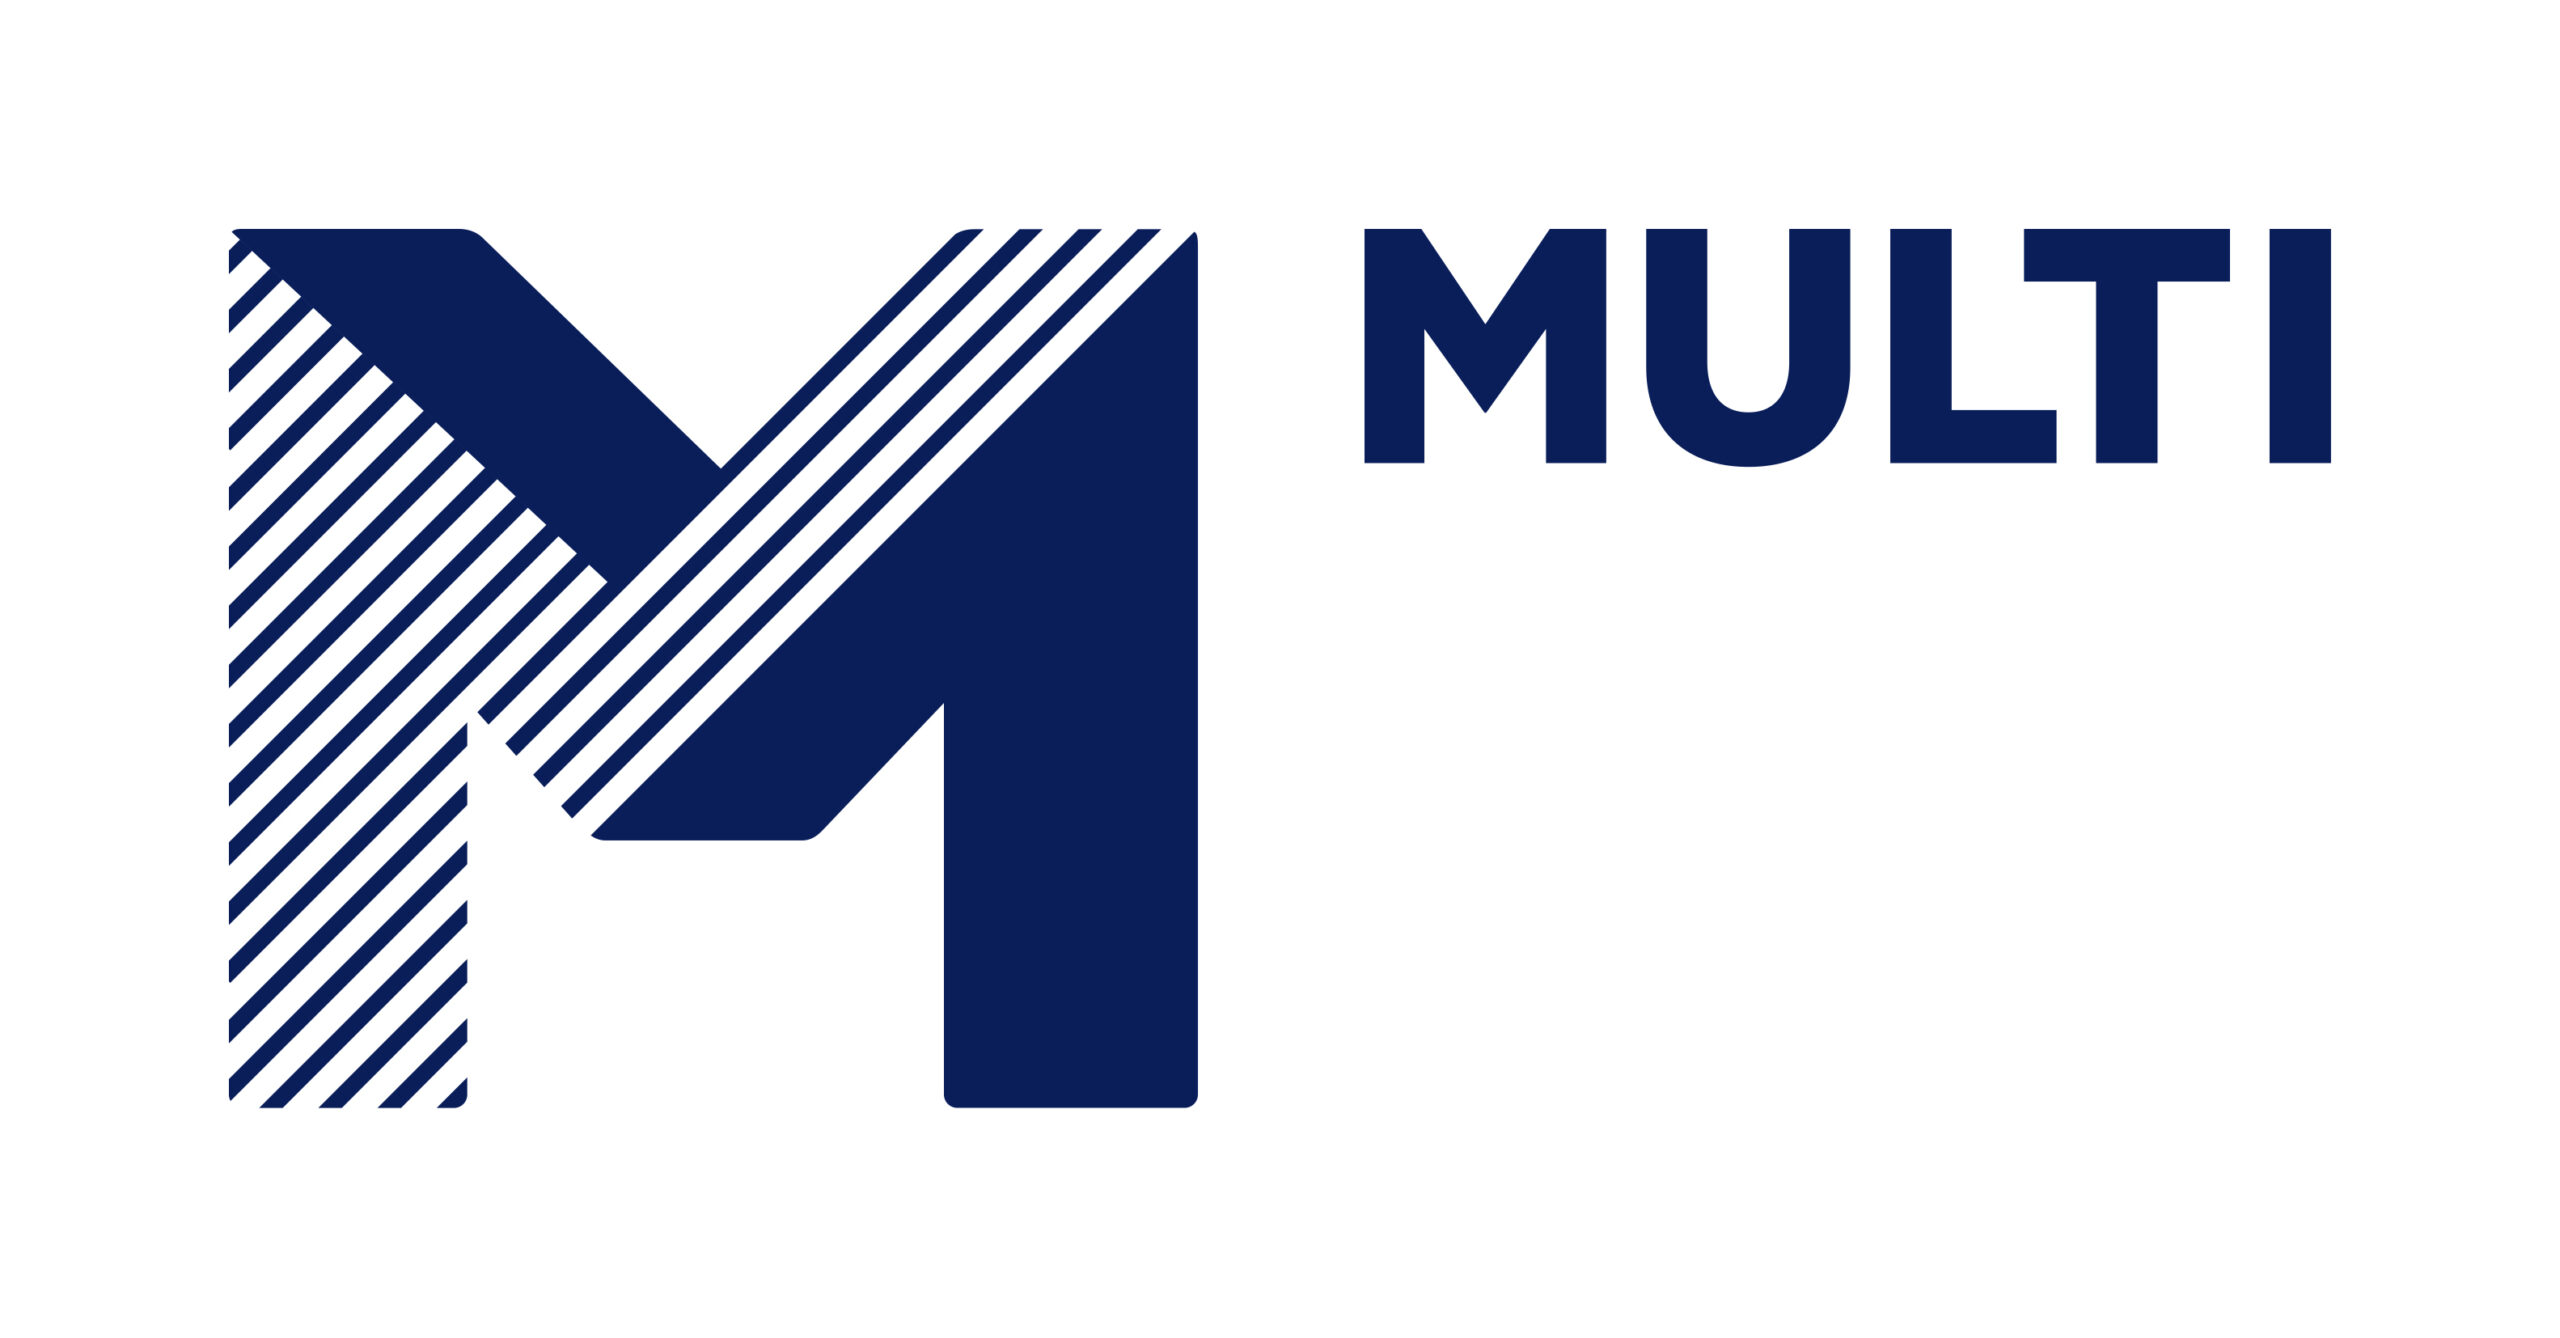 Multi Germany GmbH